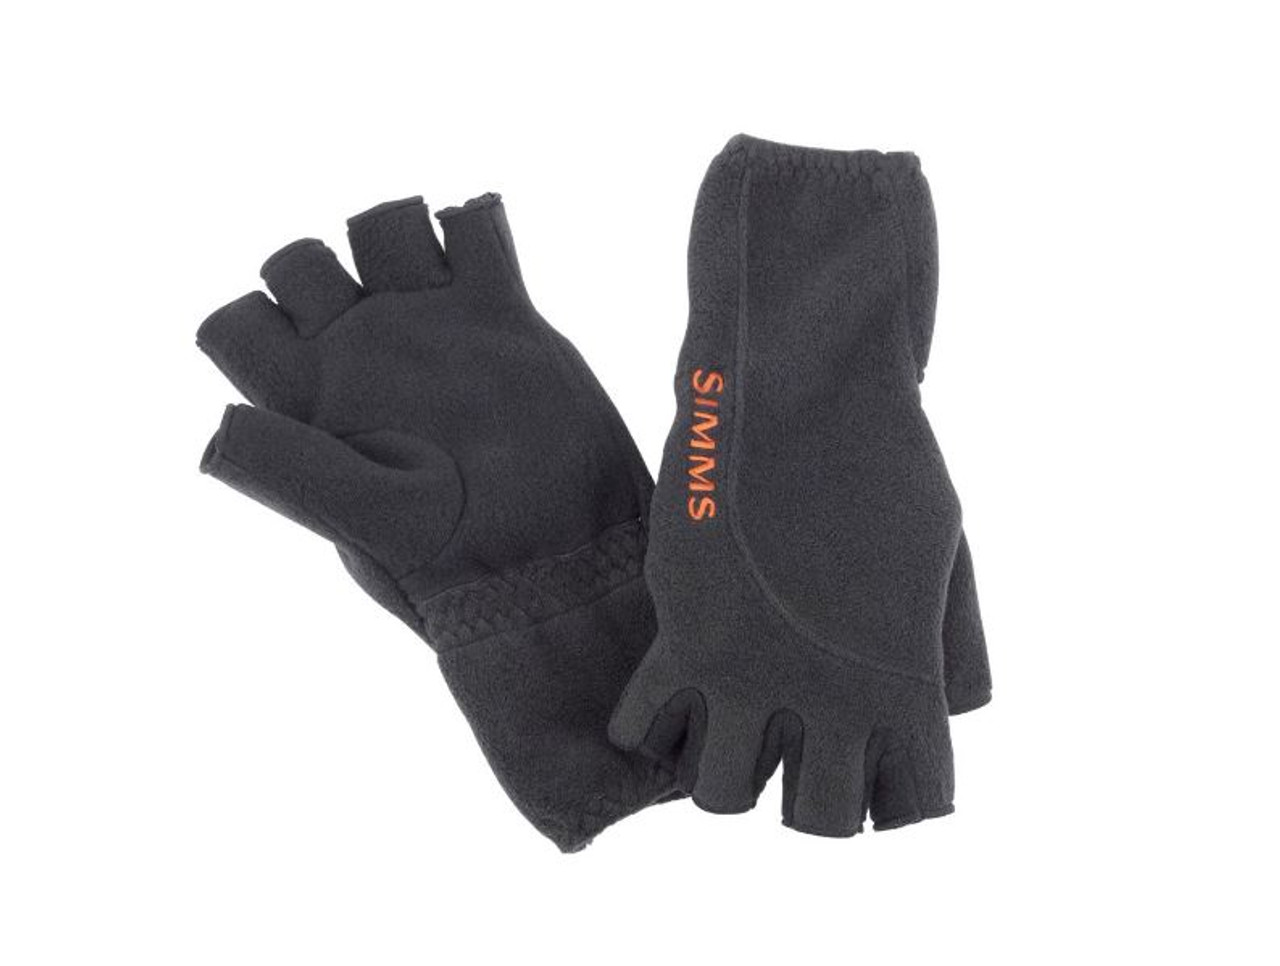 Men's Headwaters Half Finger Fishing Glove - (Large) - Black